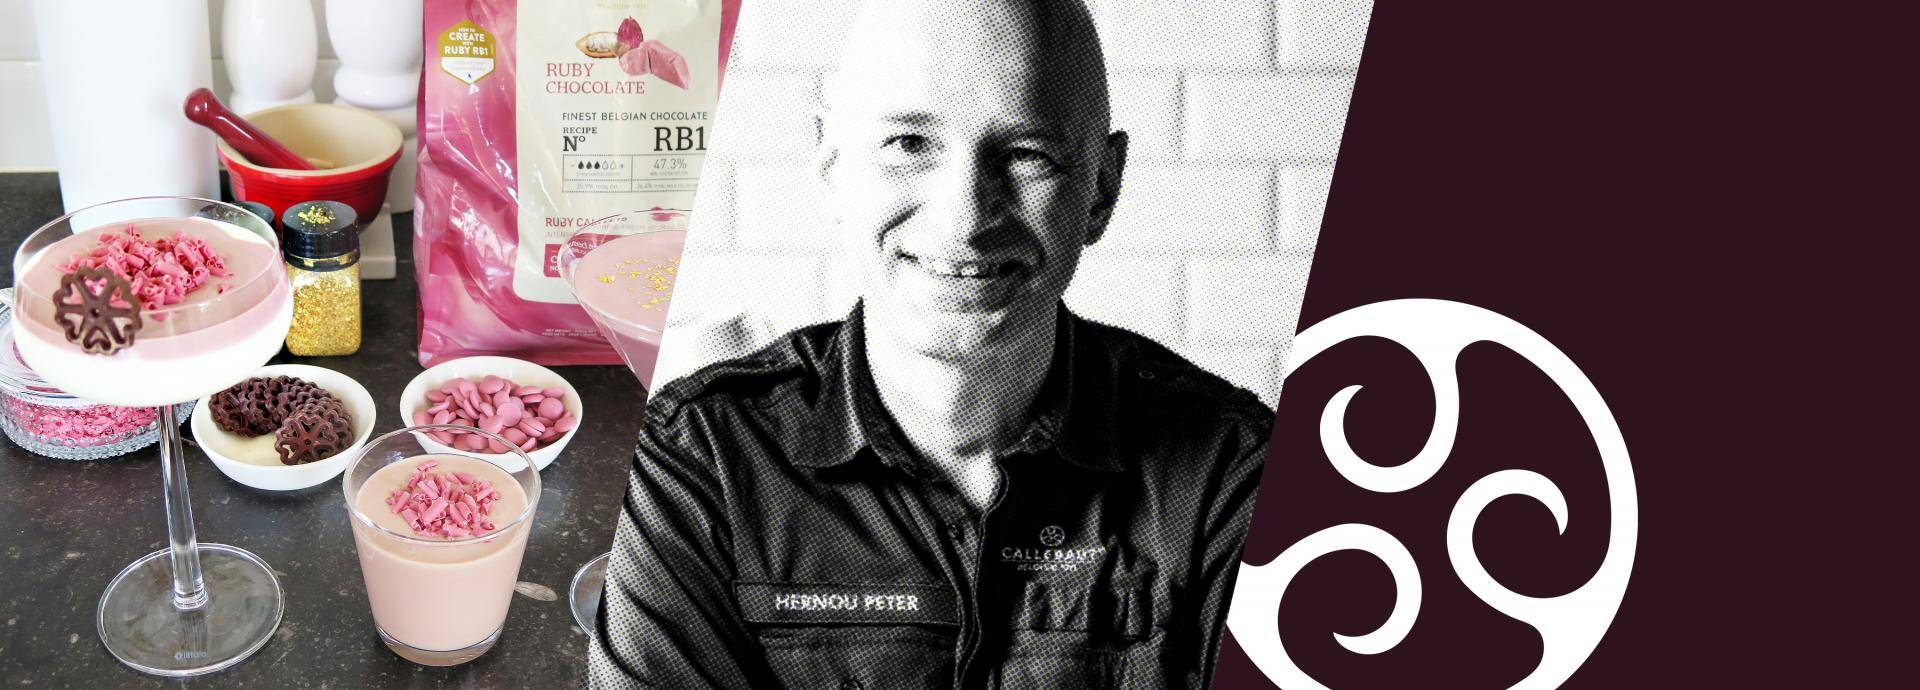 Ruby chocolate summer drinks by Callebaut barista ambassador Peter Hernou